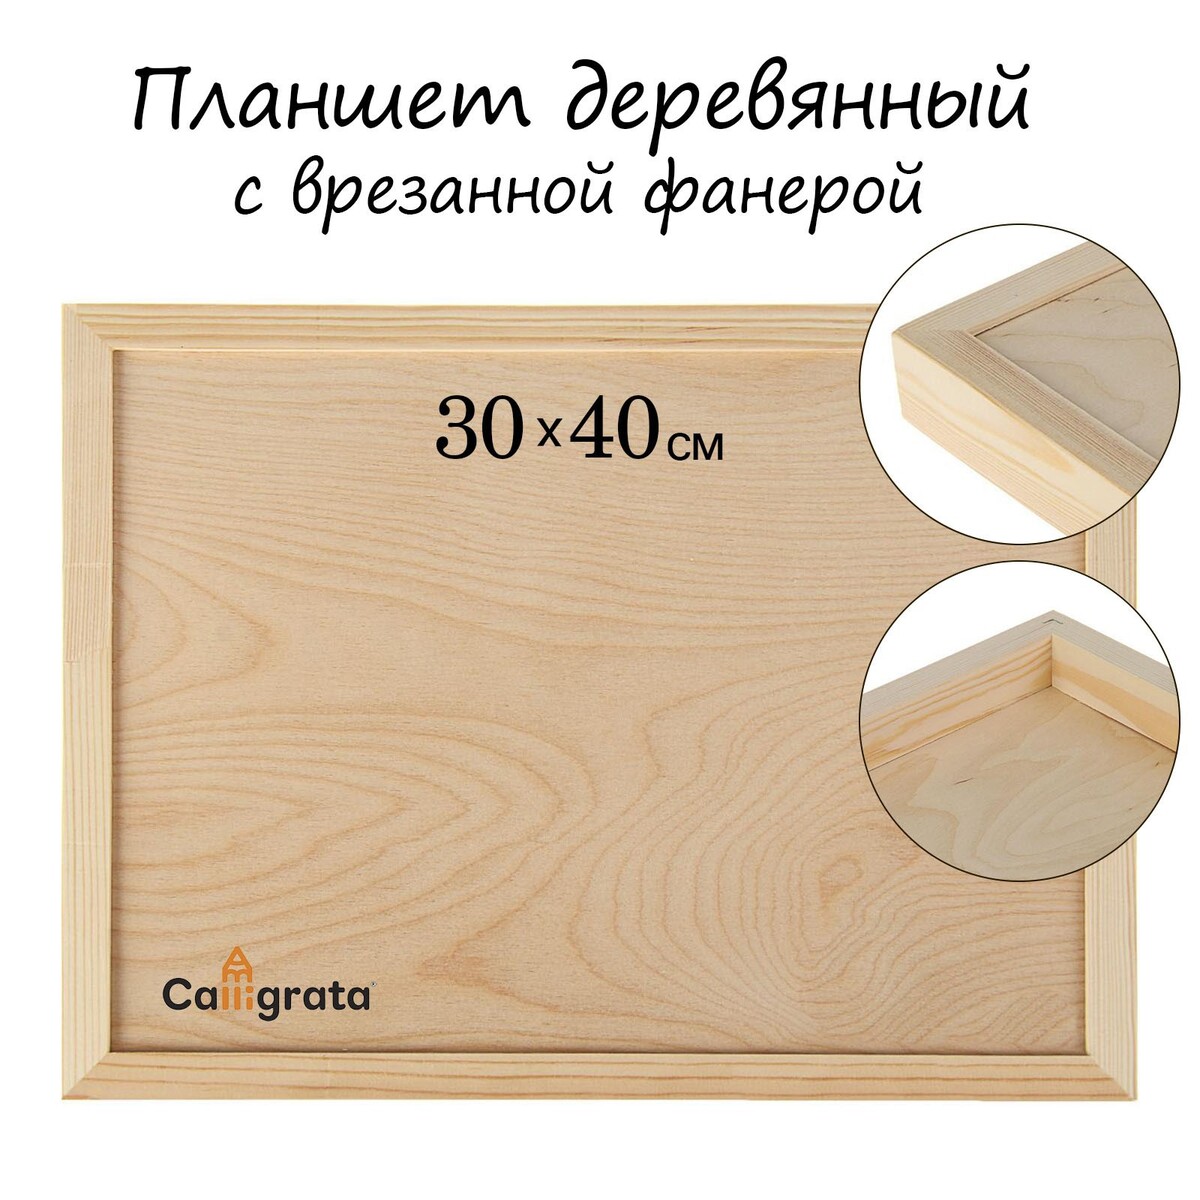 Планшет деревянный, с врезанной фанерой, 30 х 40 х 3,5 см, глубина 0.5 см, сосна планшет деревянный 40 х 50 х 2 см двп